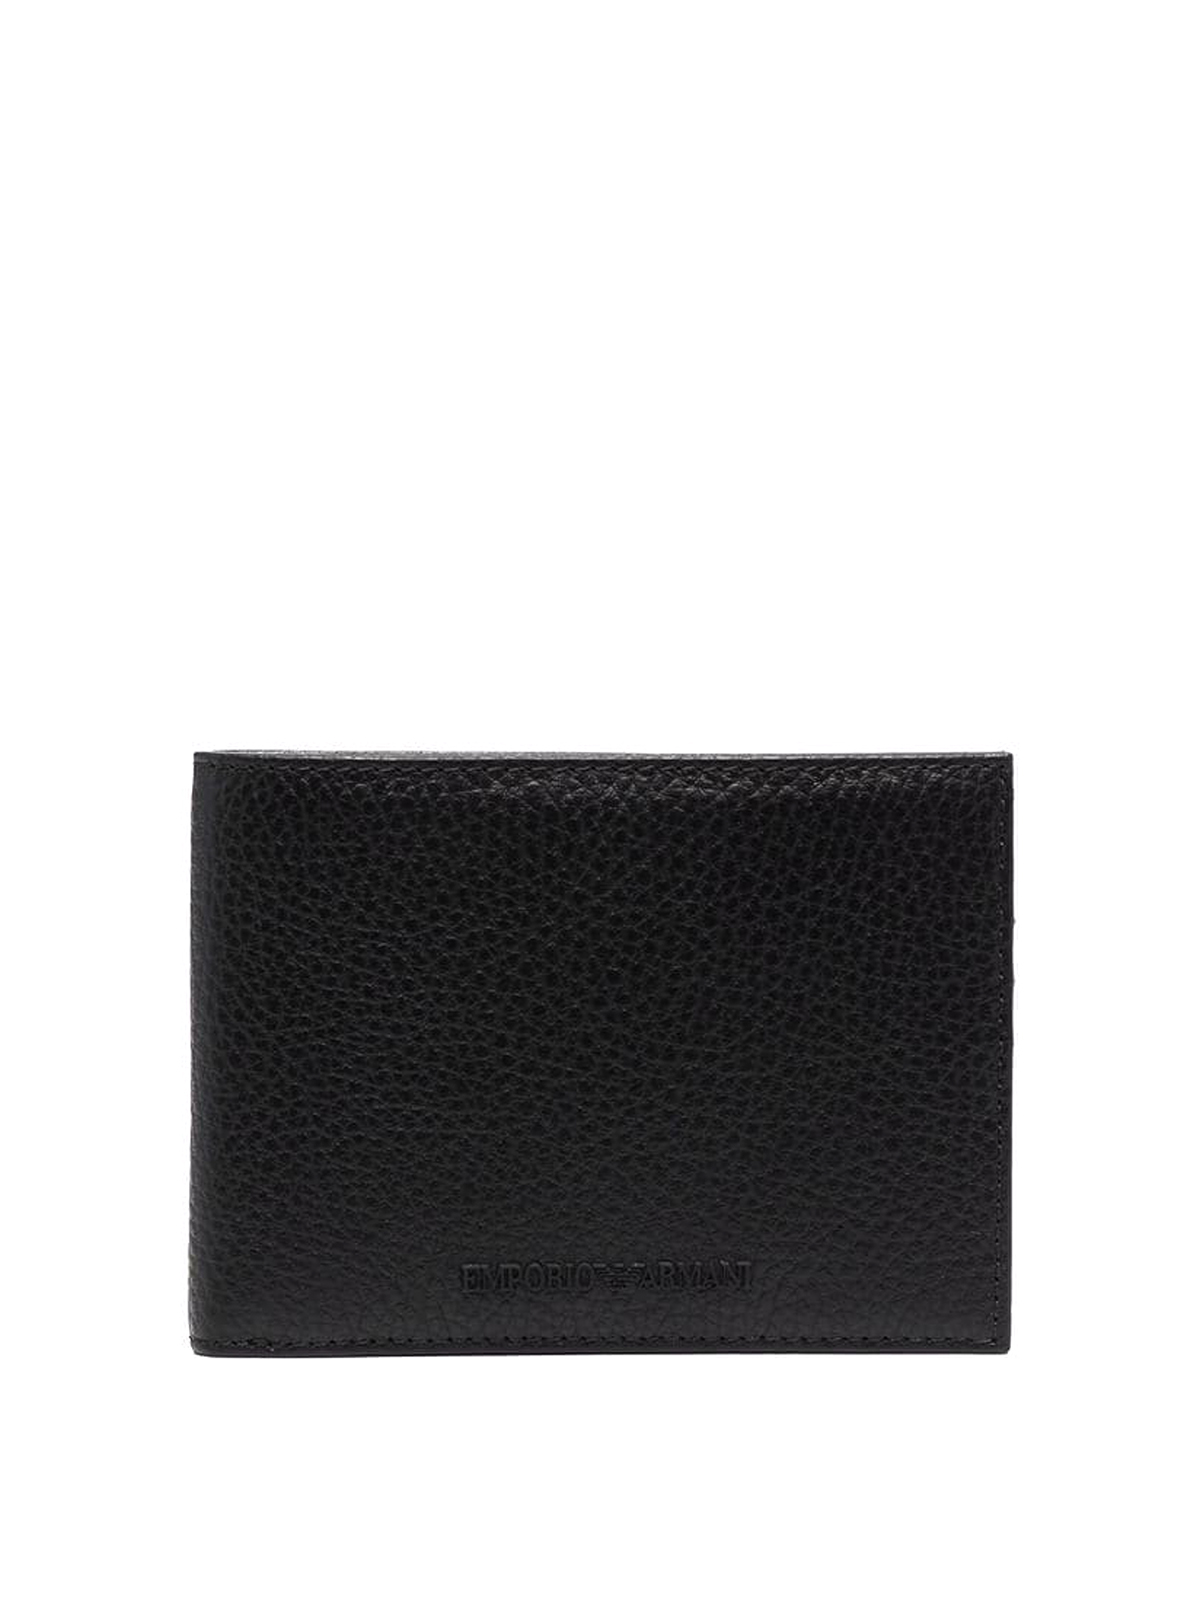 Emporio Armani Men Black Genuine Leather Wallet Card India | Ubuy